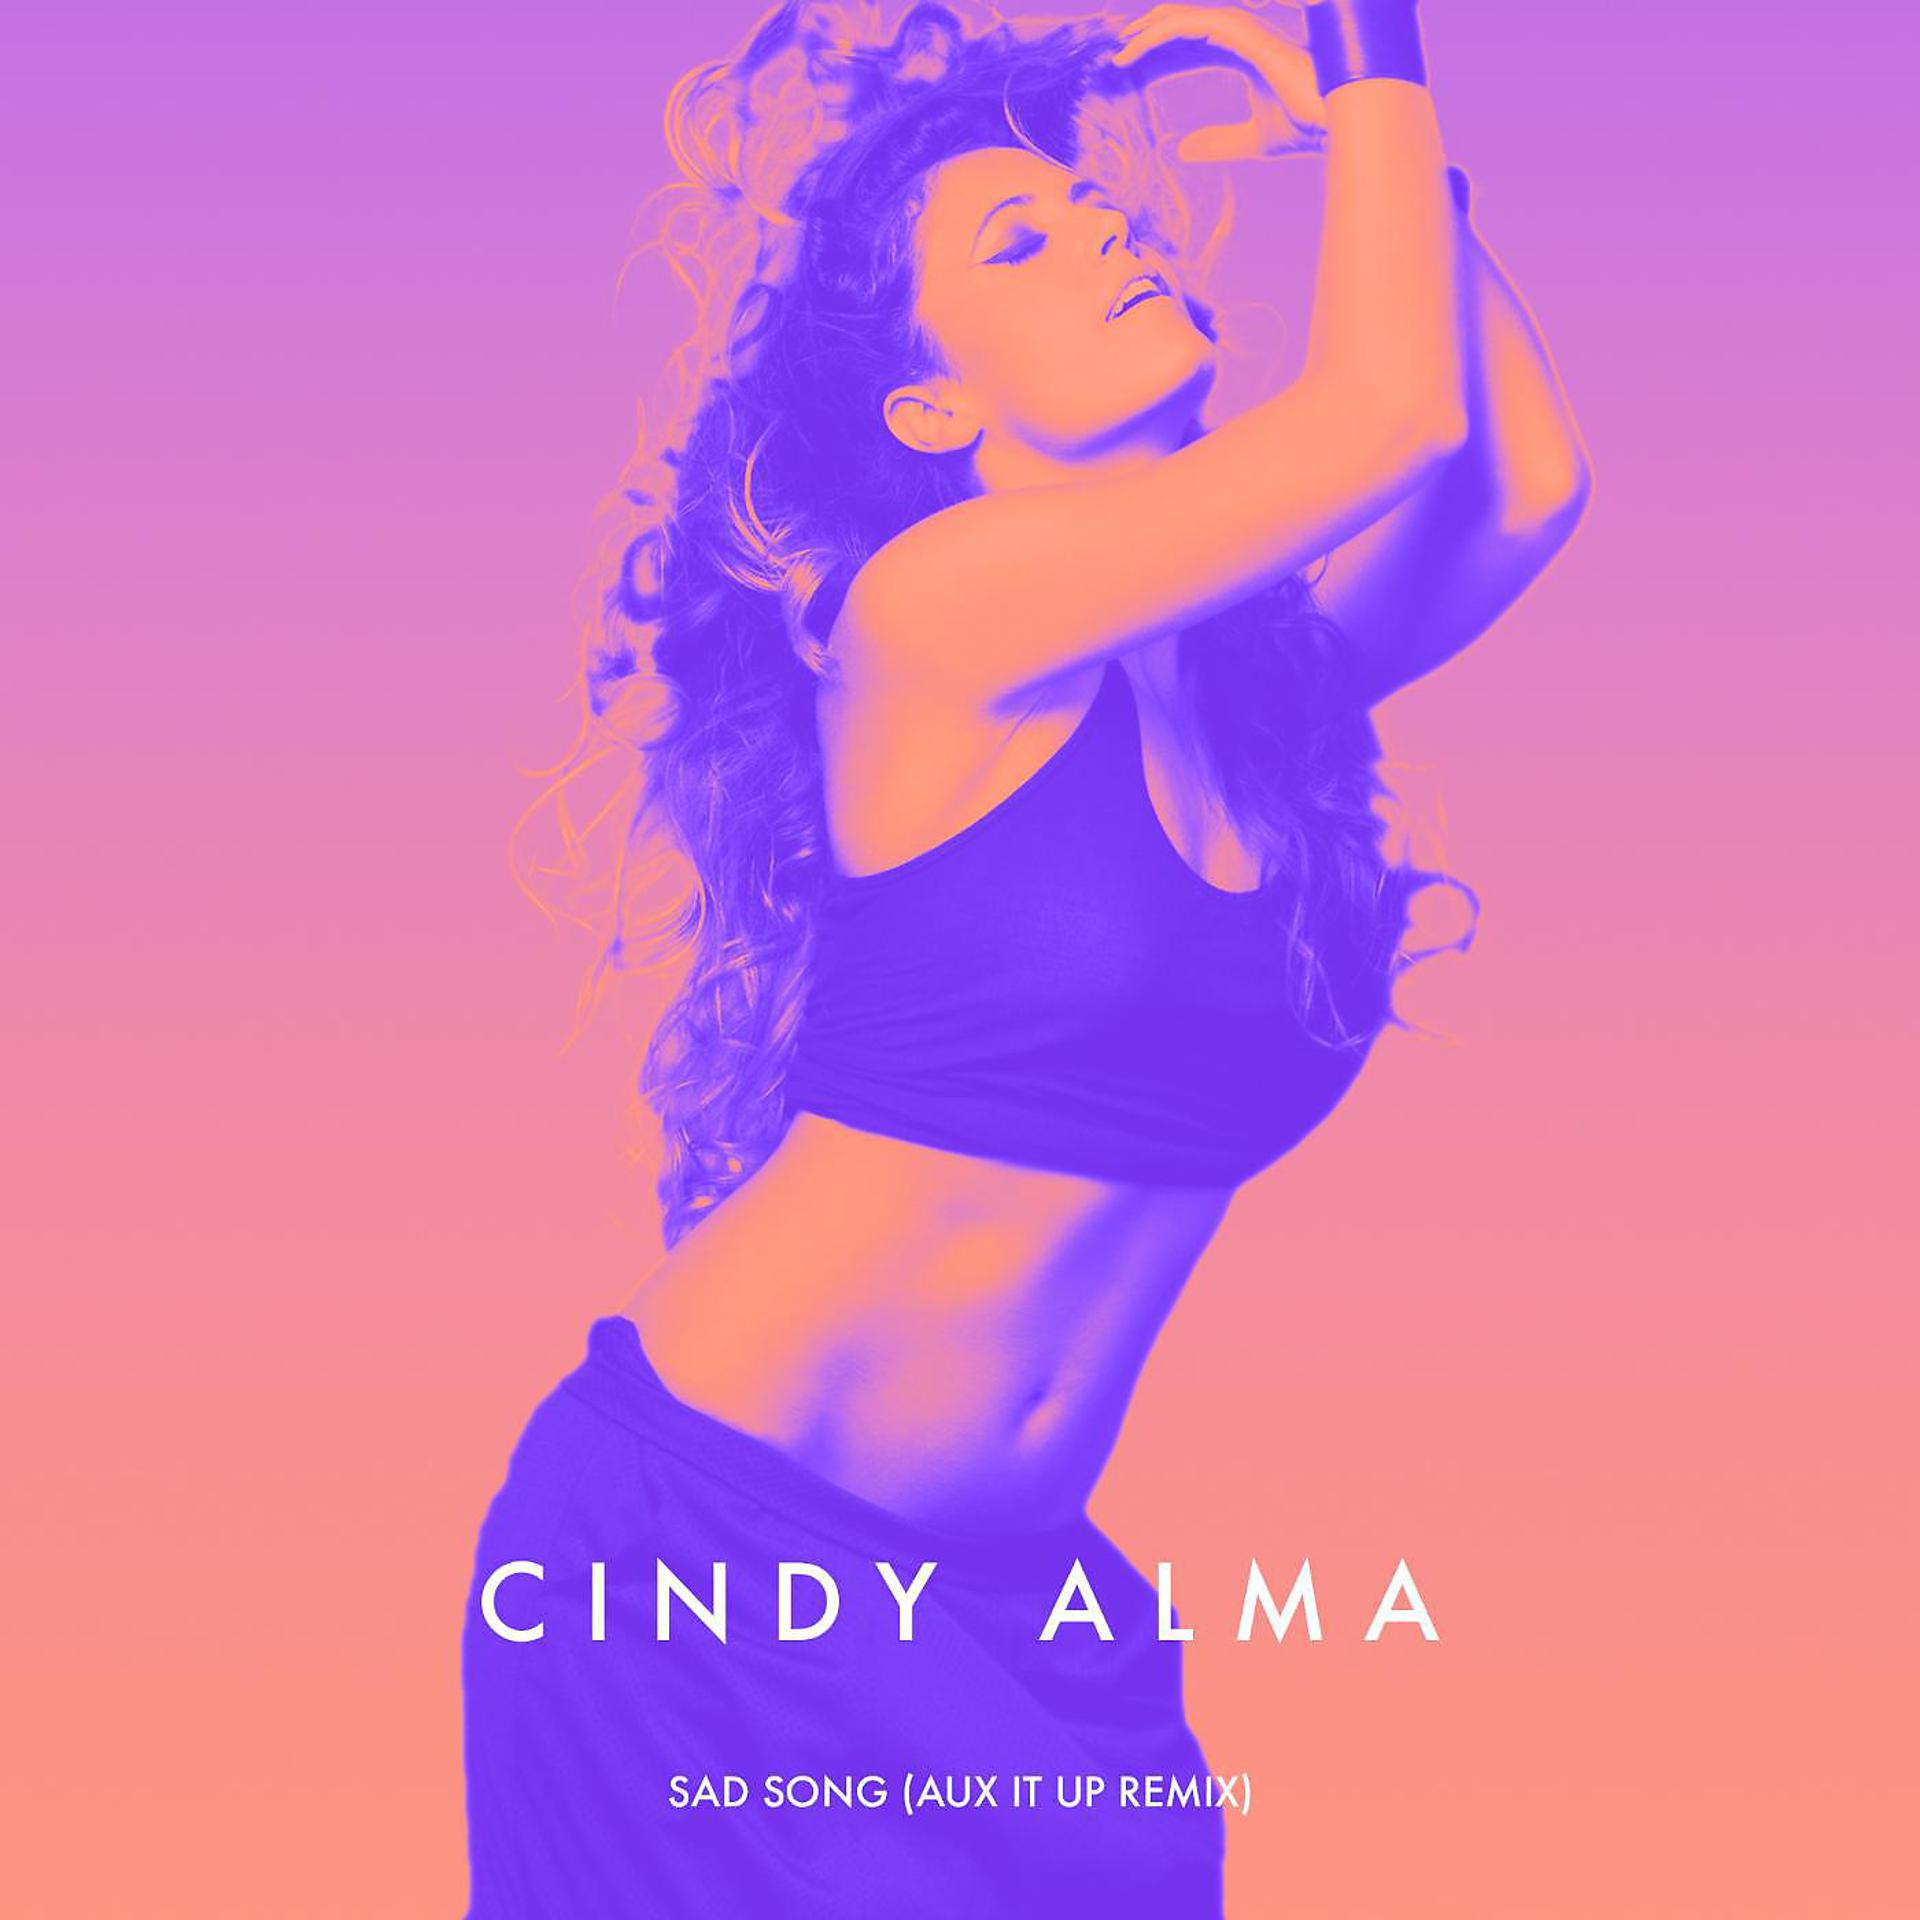 Cindy Alma. Cindy Alma певица. Обложка альбома - Armin van Buuren feat. Cindy Alma - beautiful Life. Песня аукс. Нежная speed up ремикс